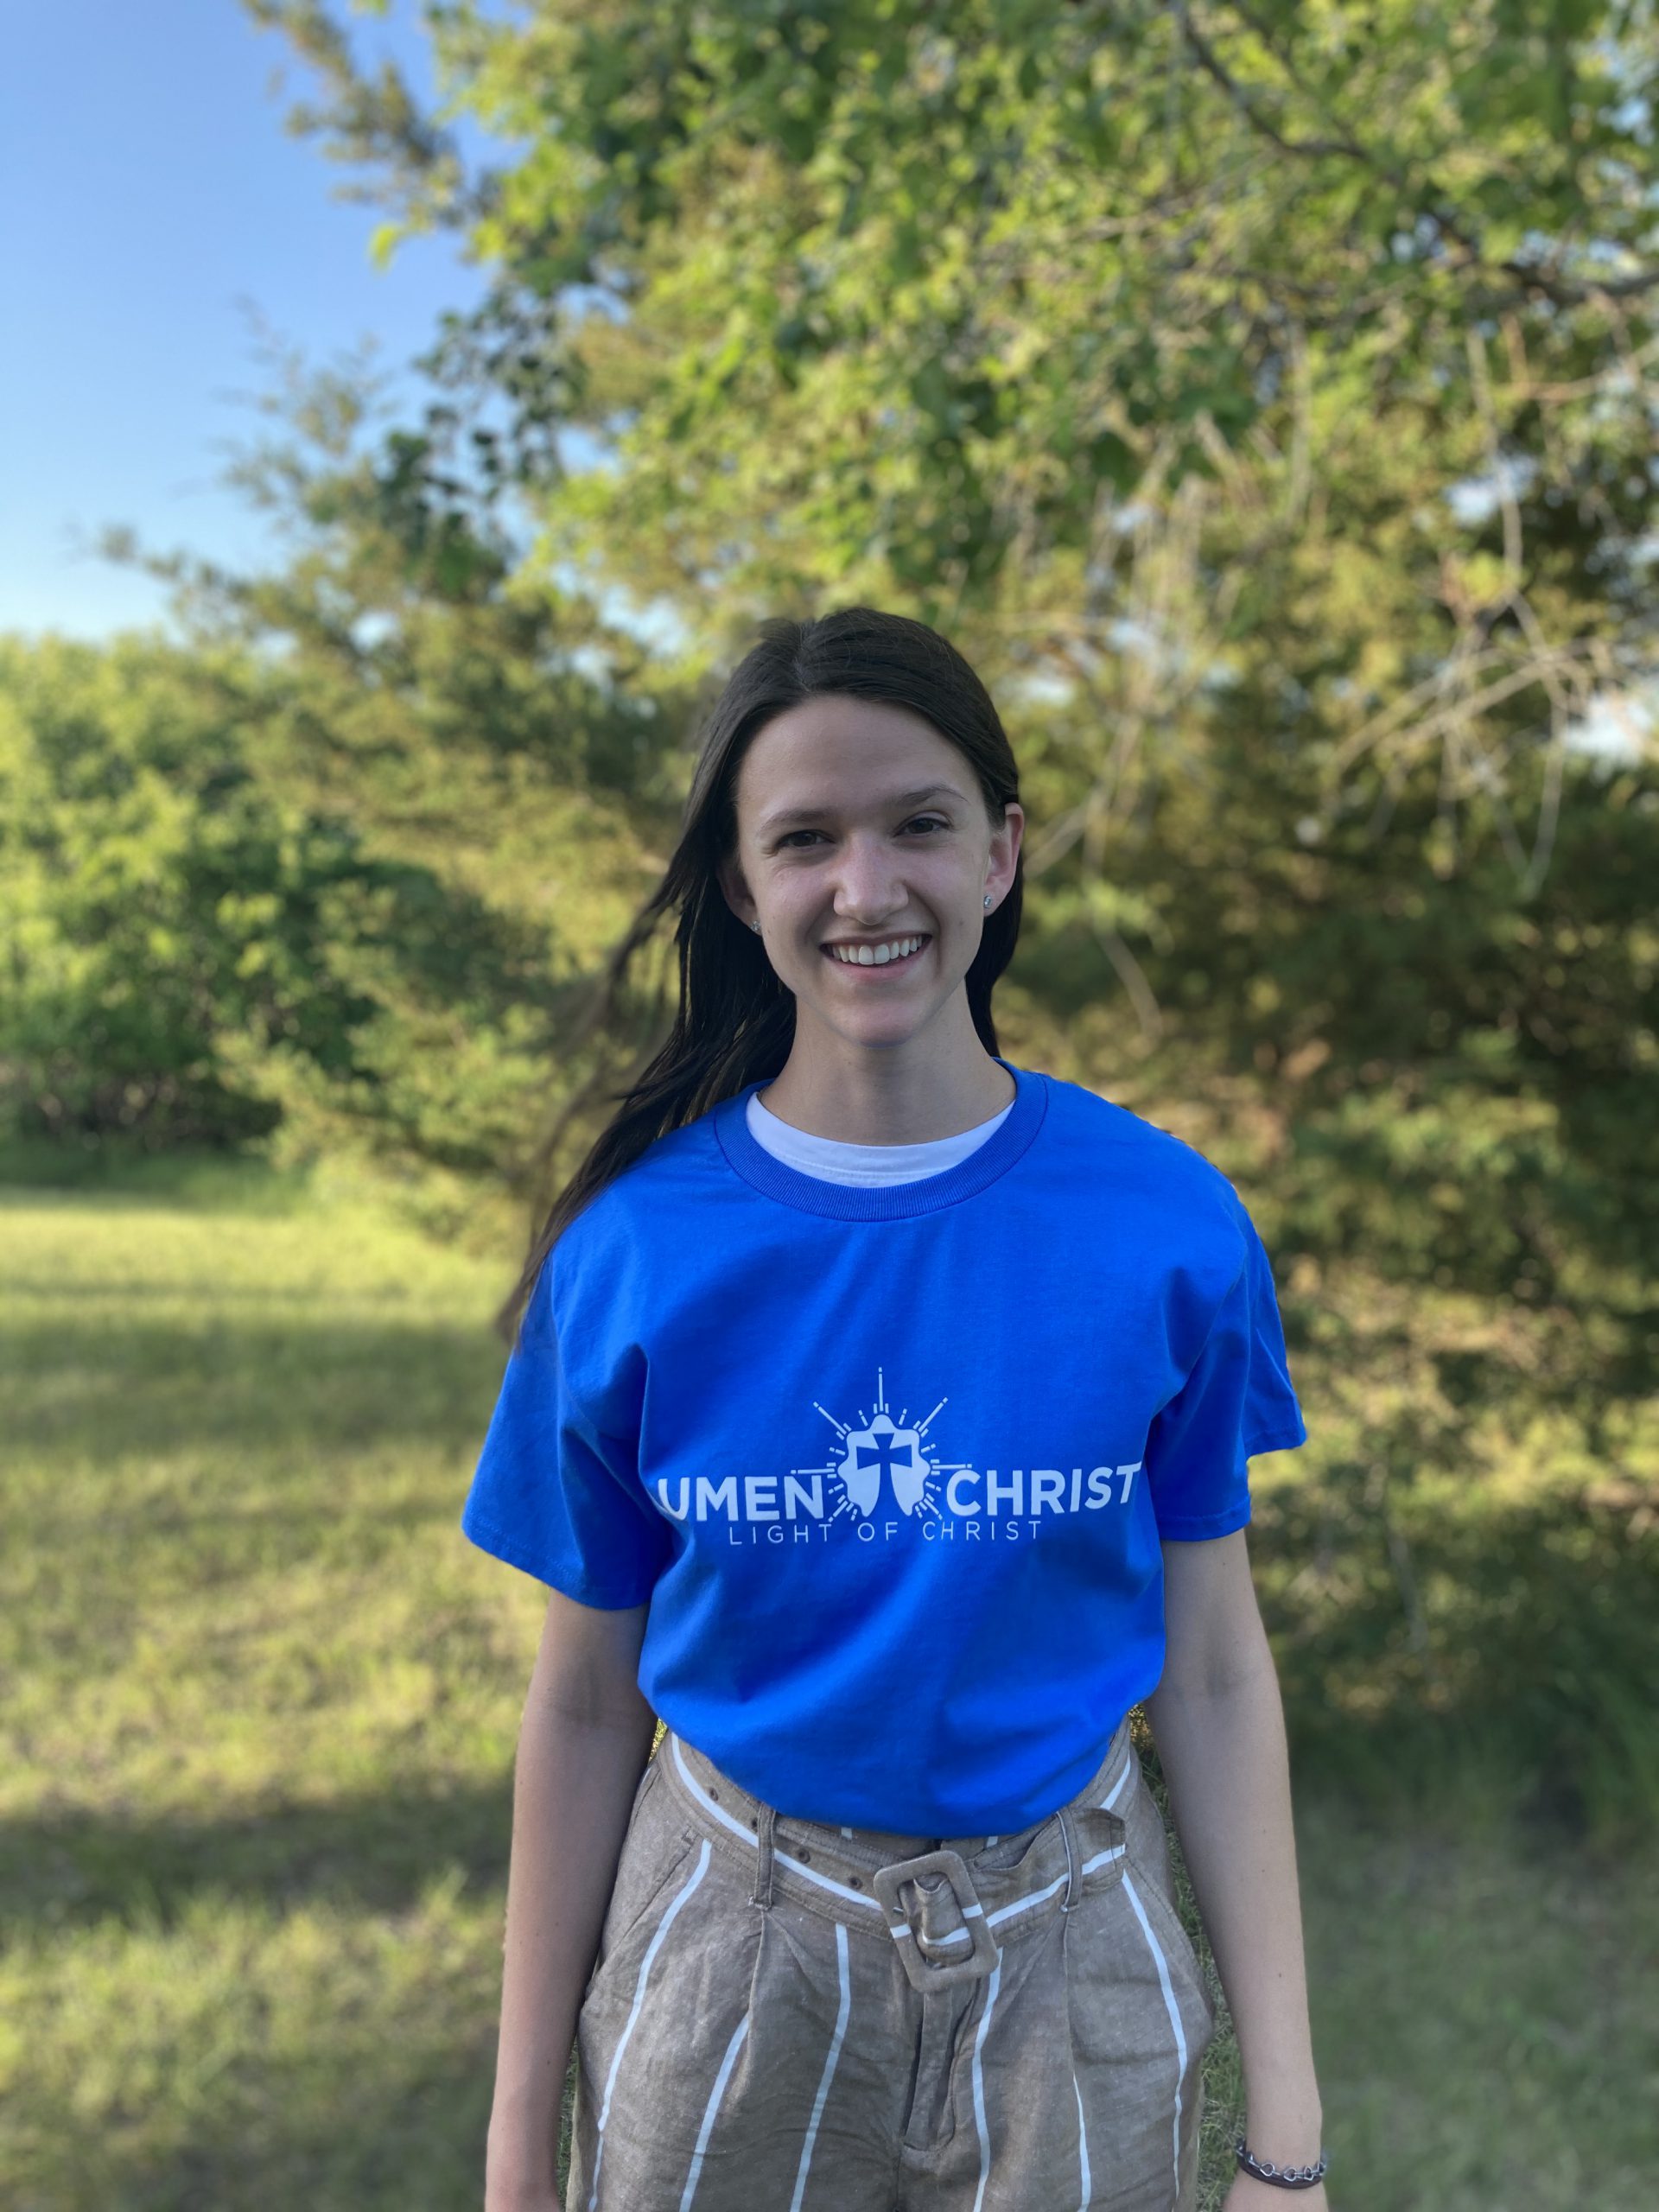 Anne Marie Smith -Lumen Christi missionary